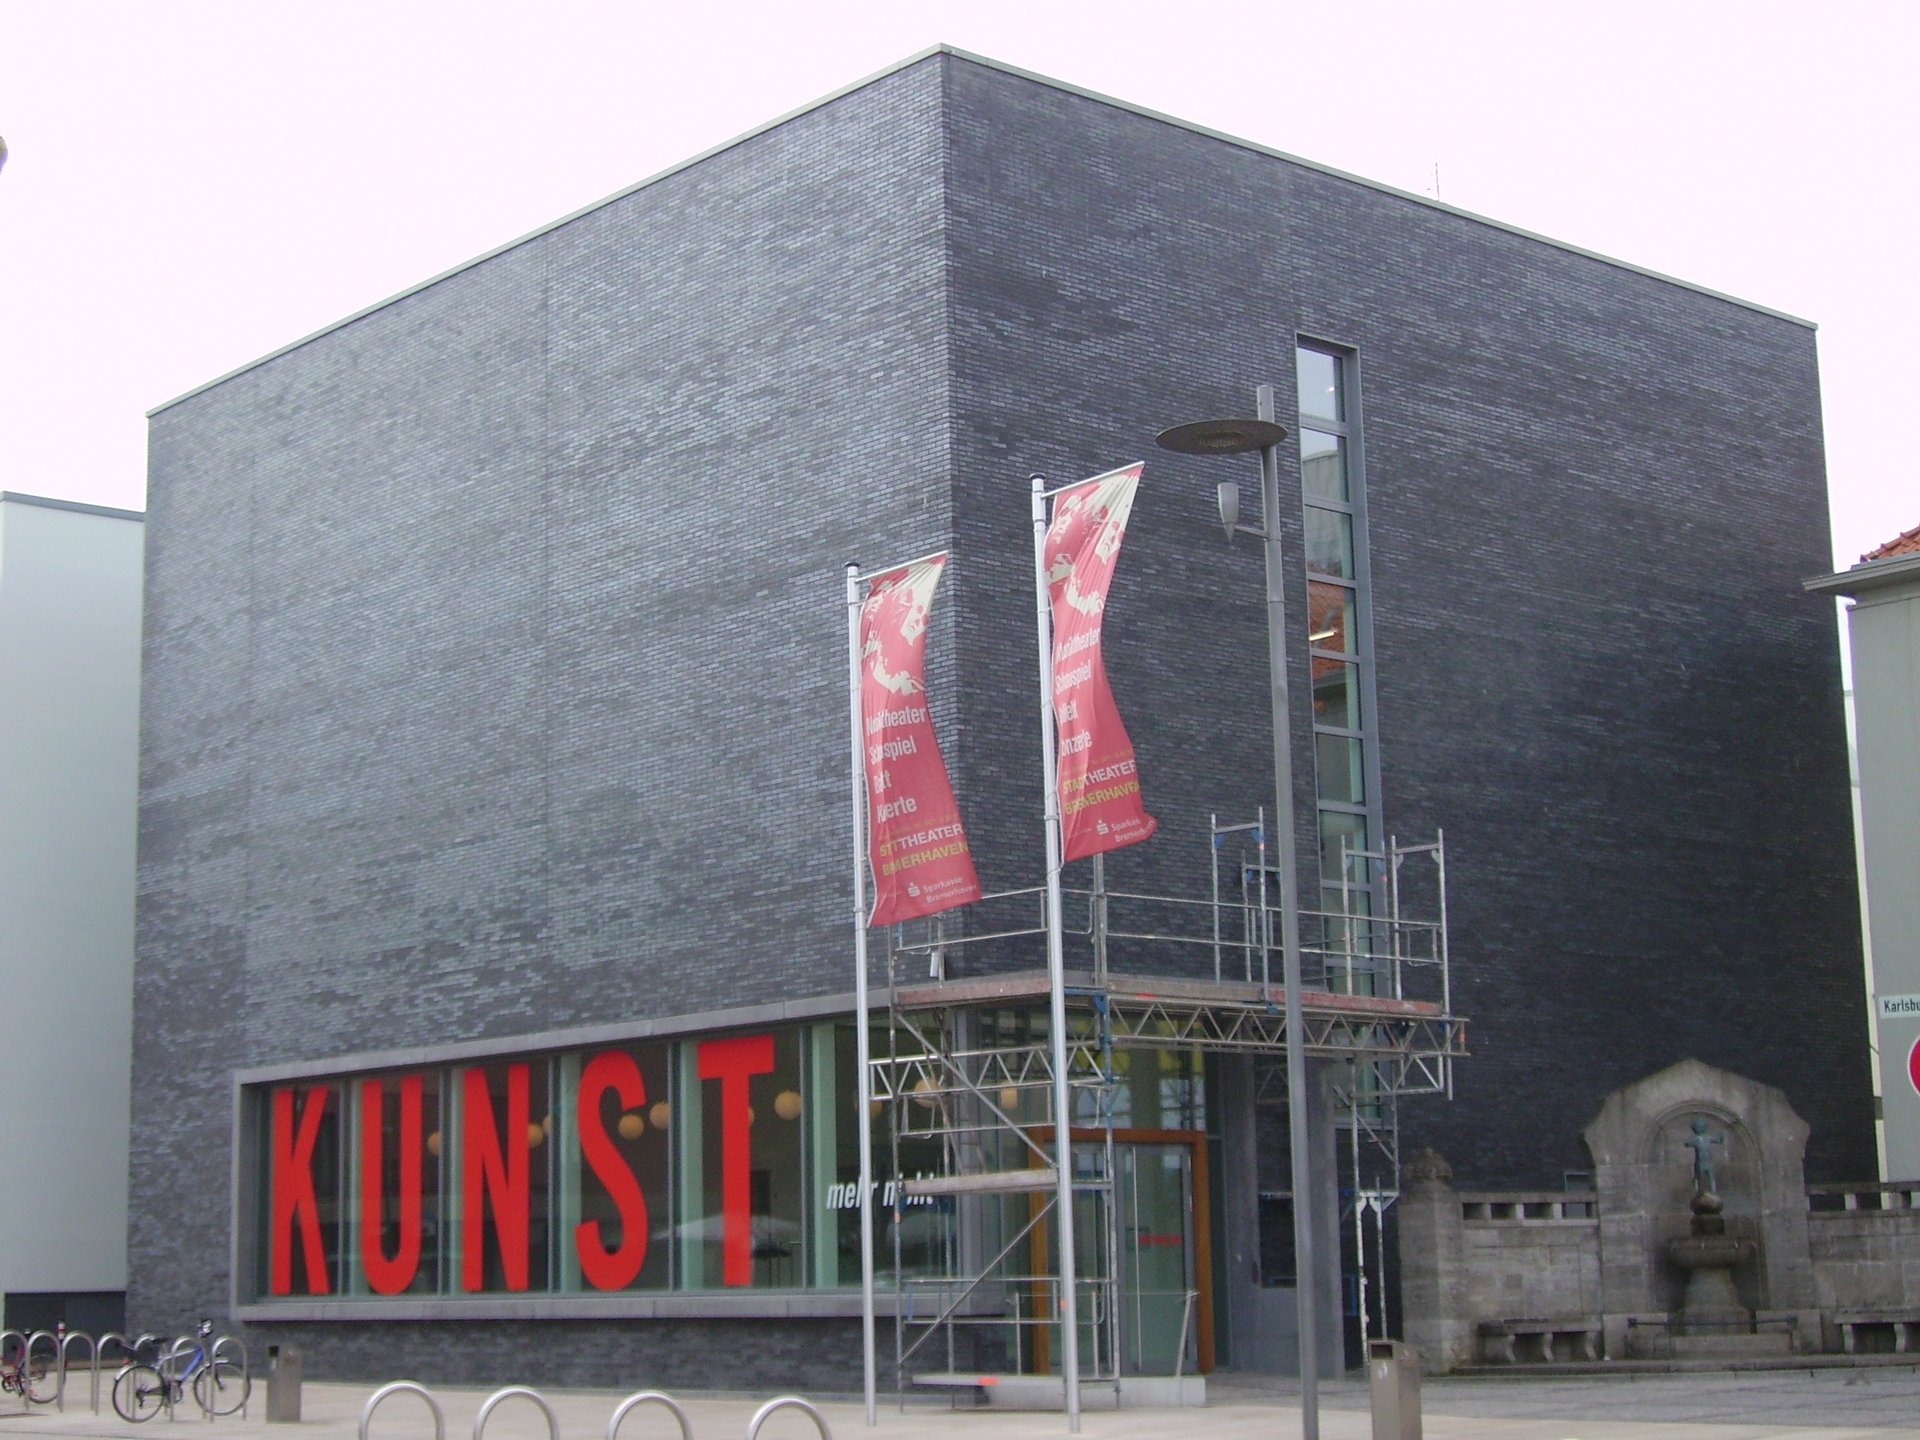 Kunstmuseum_Bremerhaven (1).jpg